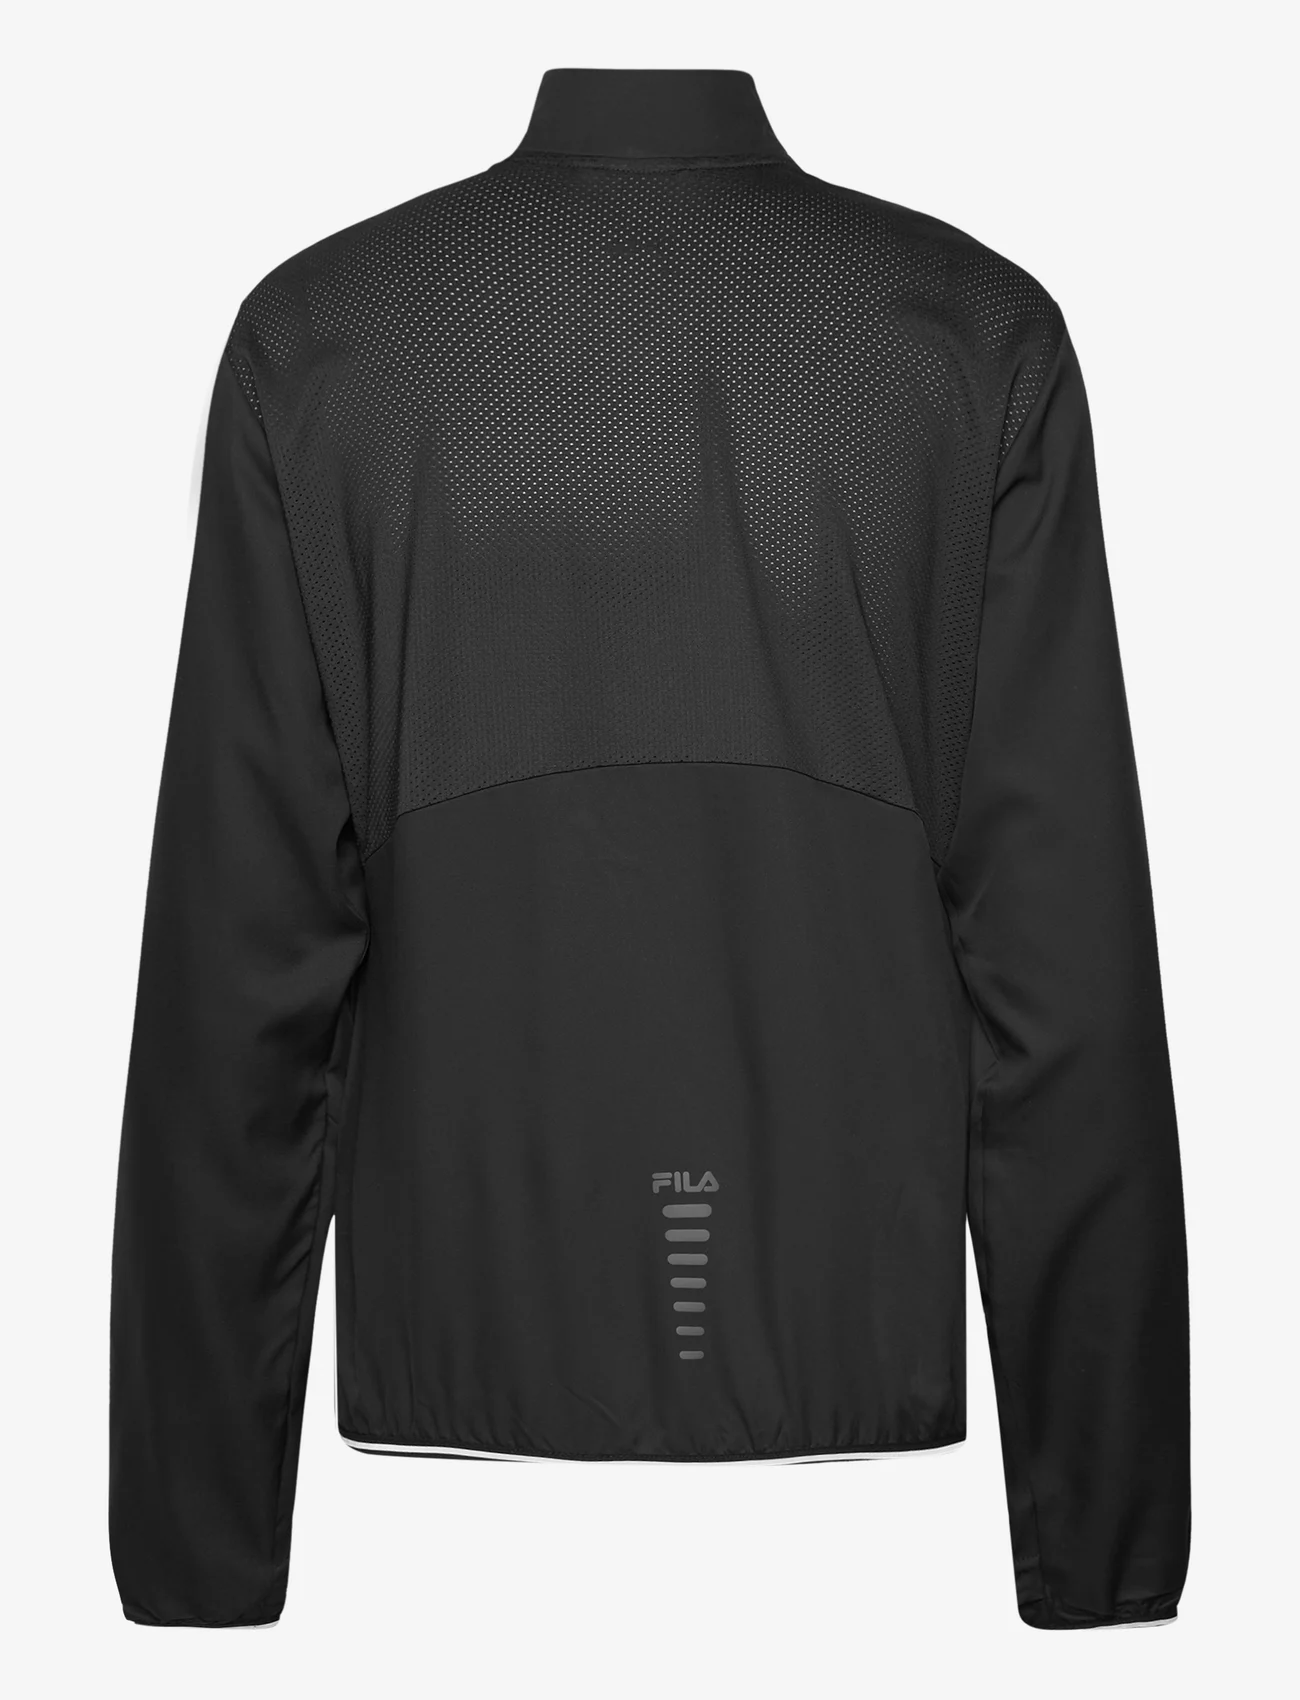 FILA - RONCHAMP running jacket - athleisurejacken - black - 1